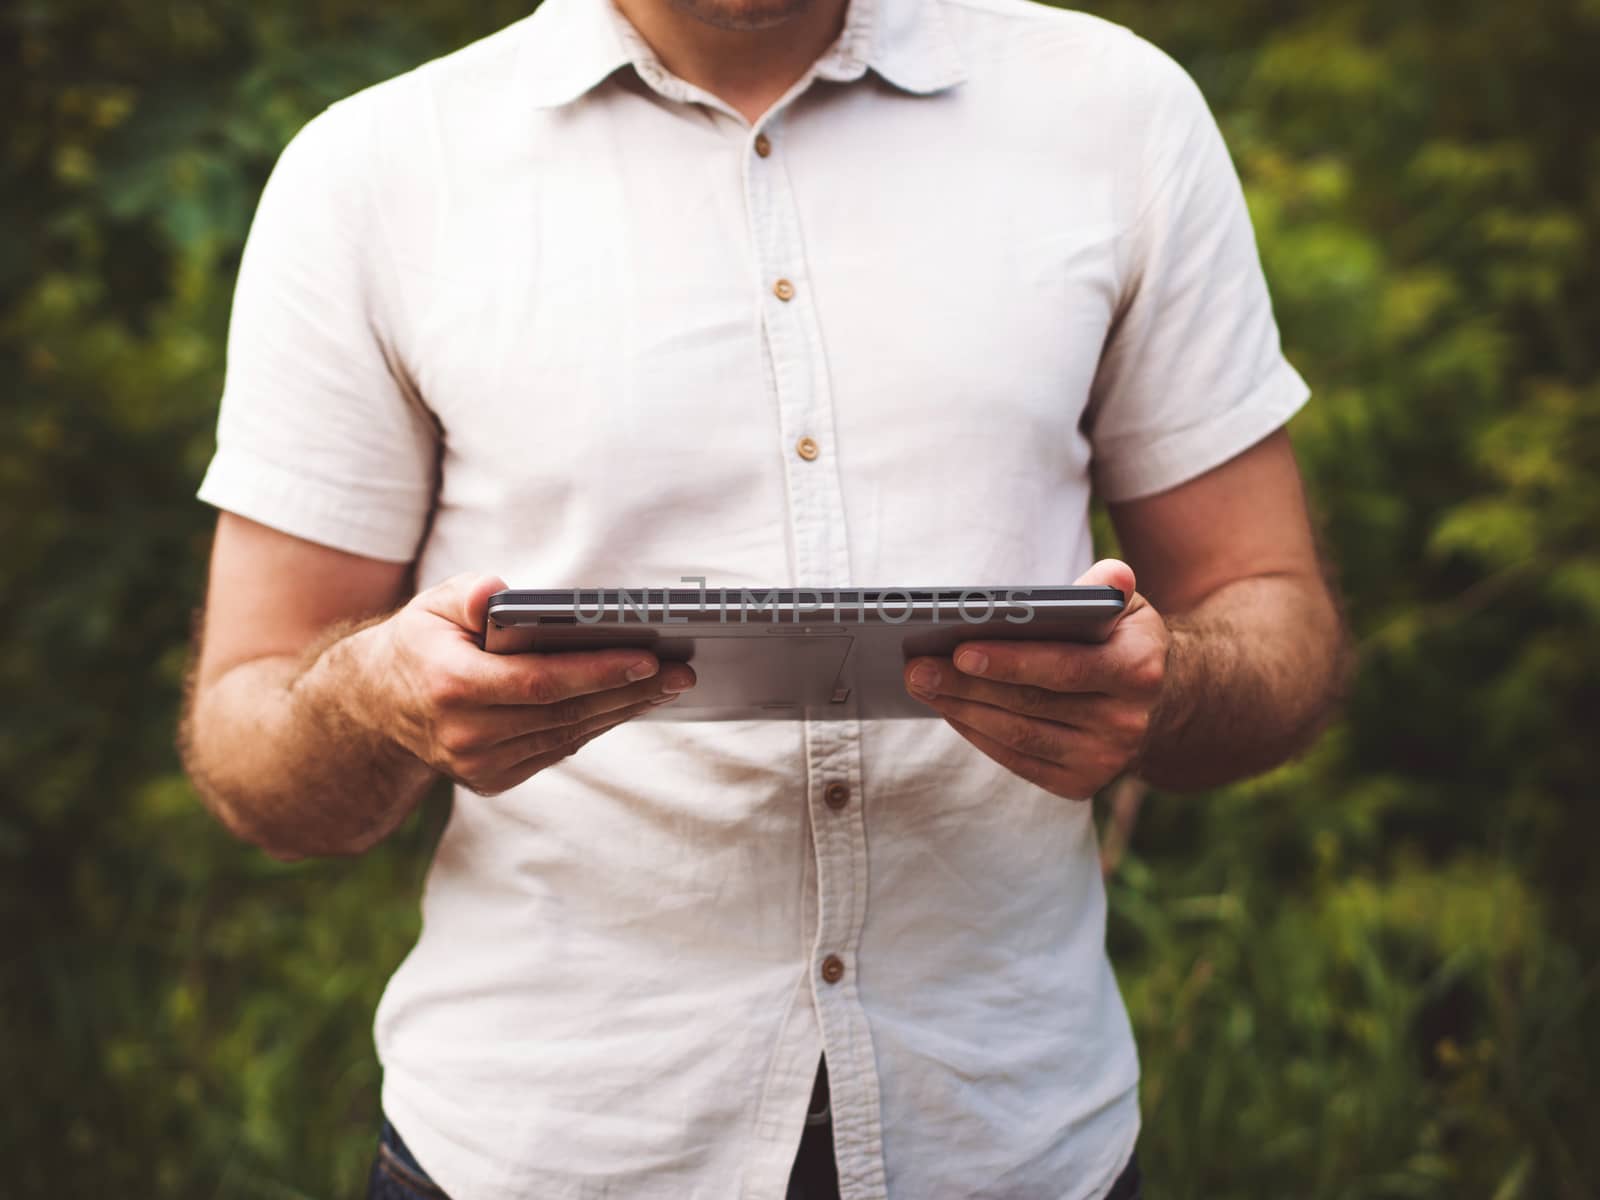 Man reading digital tablet outdoors, close up by fascinadora